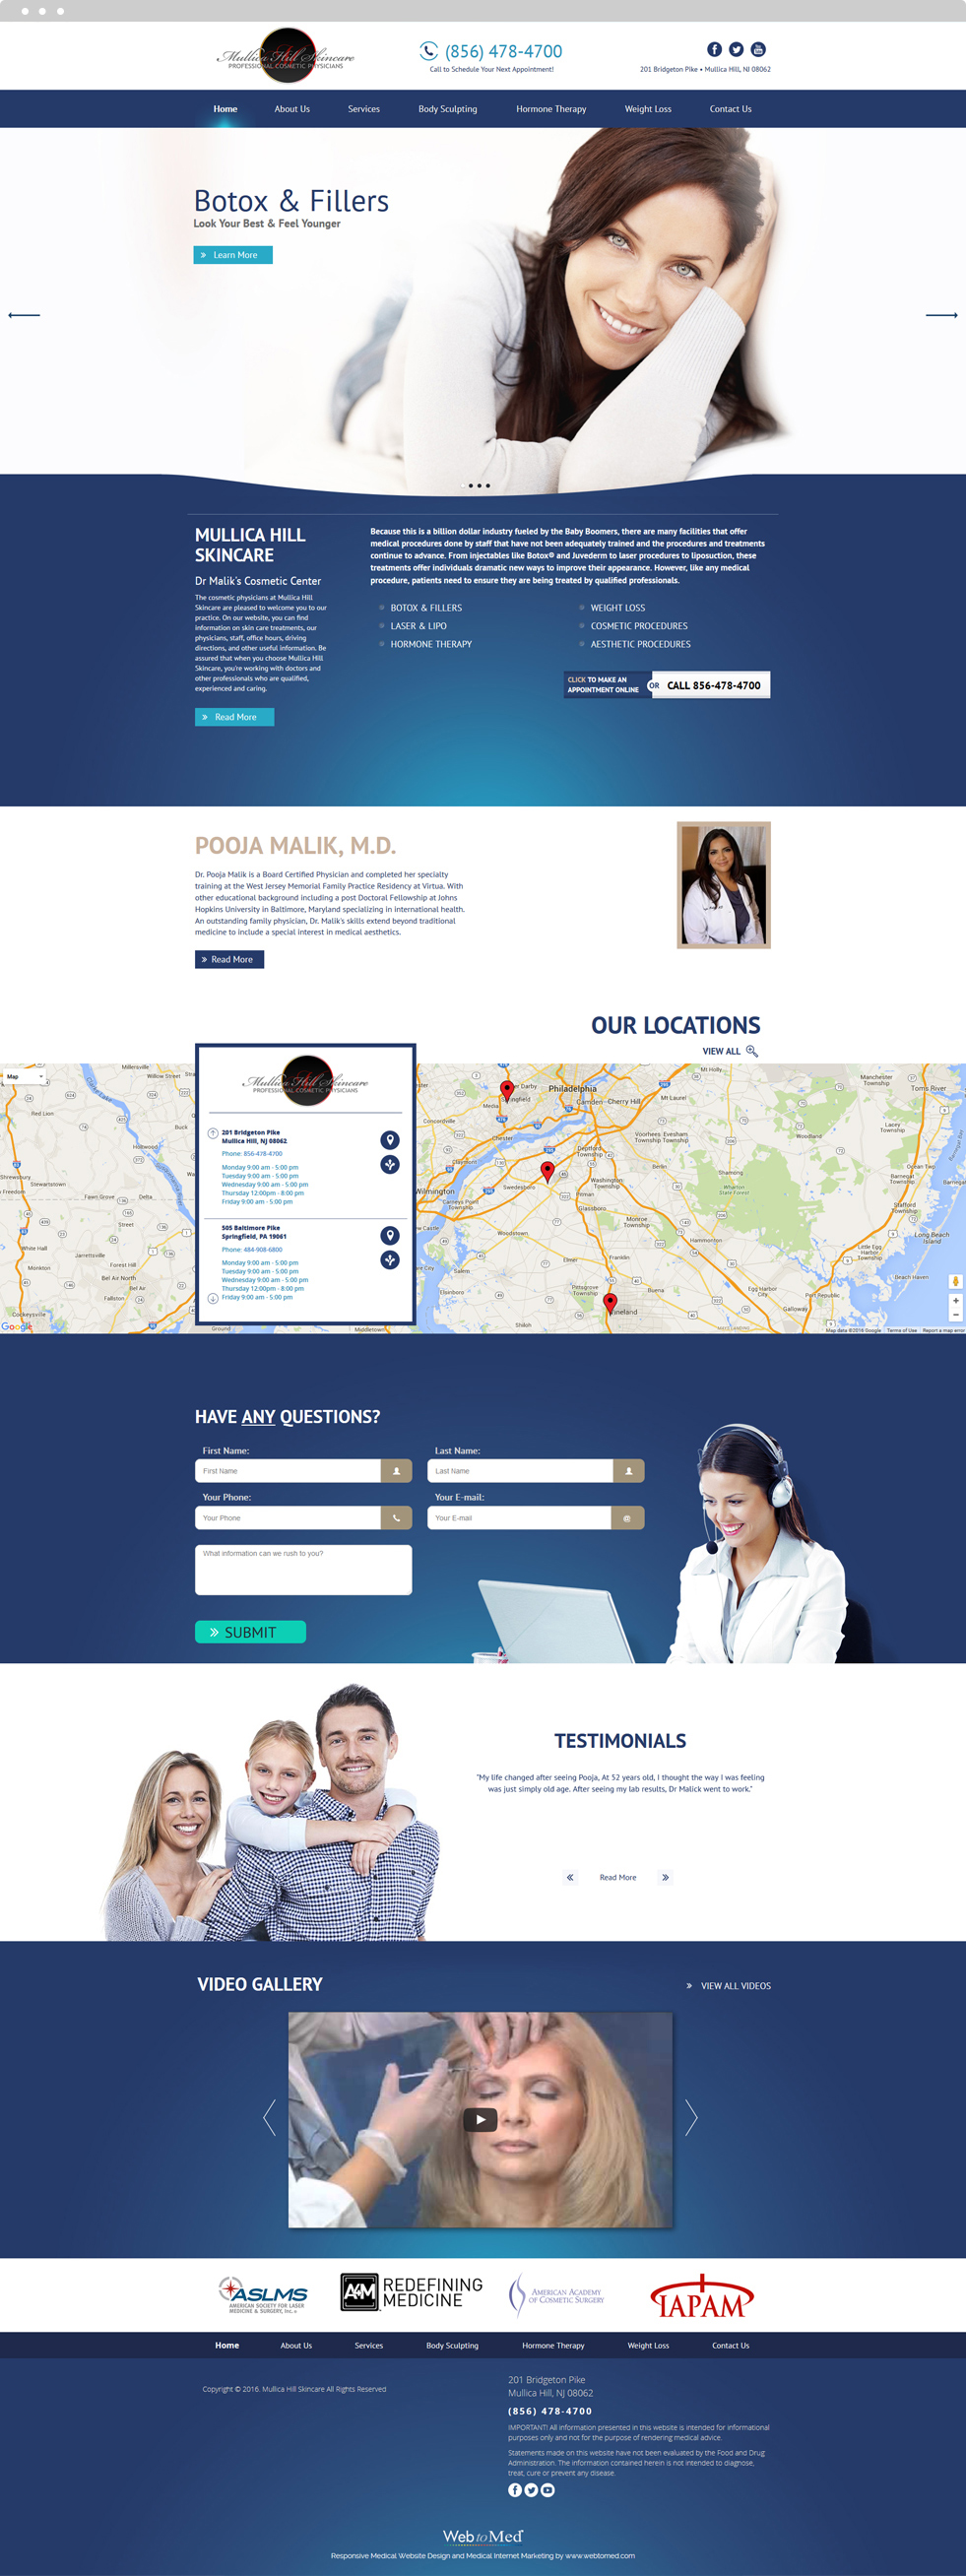 Med Spa Website Design - Mullica Hill Skincare - Homepage